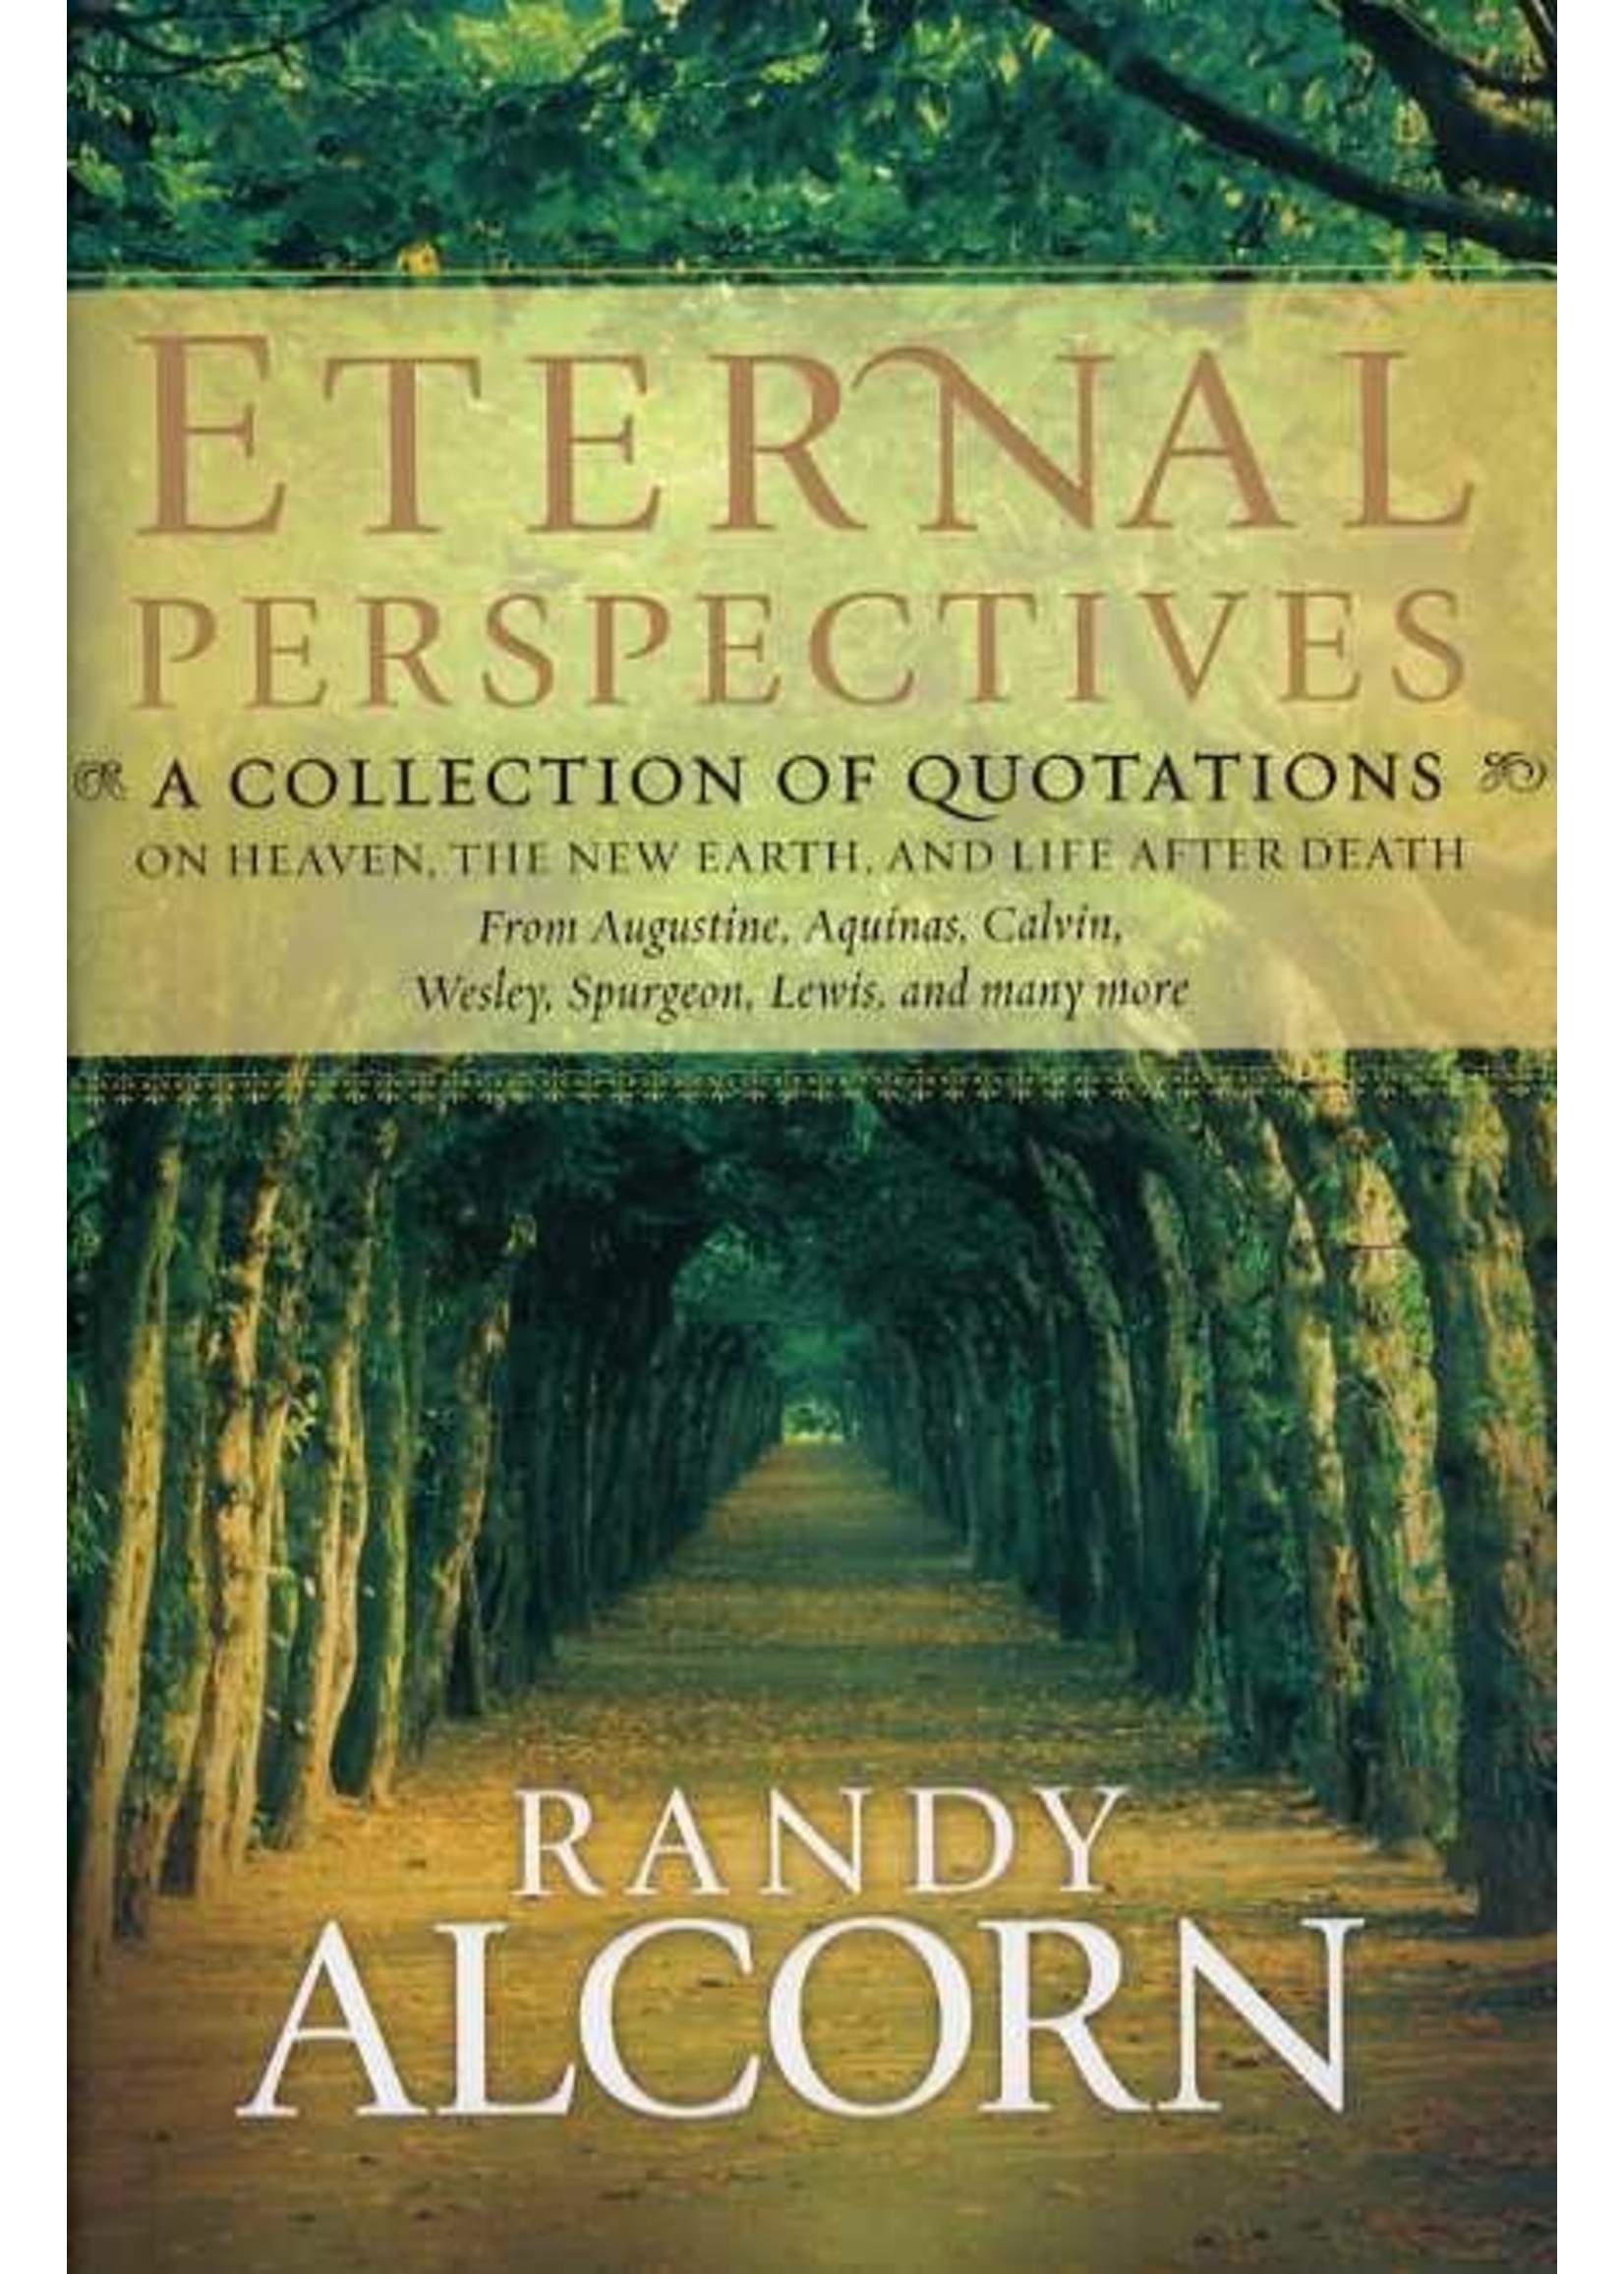 Tyndale Eternal Perspectives - Randy Alcorn